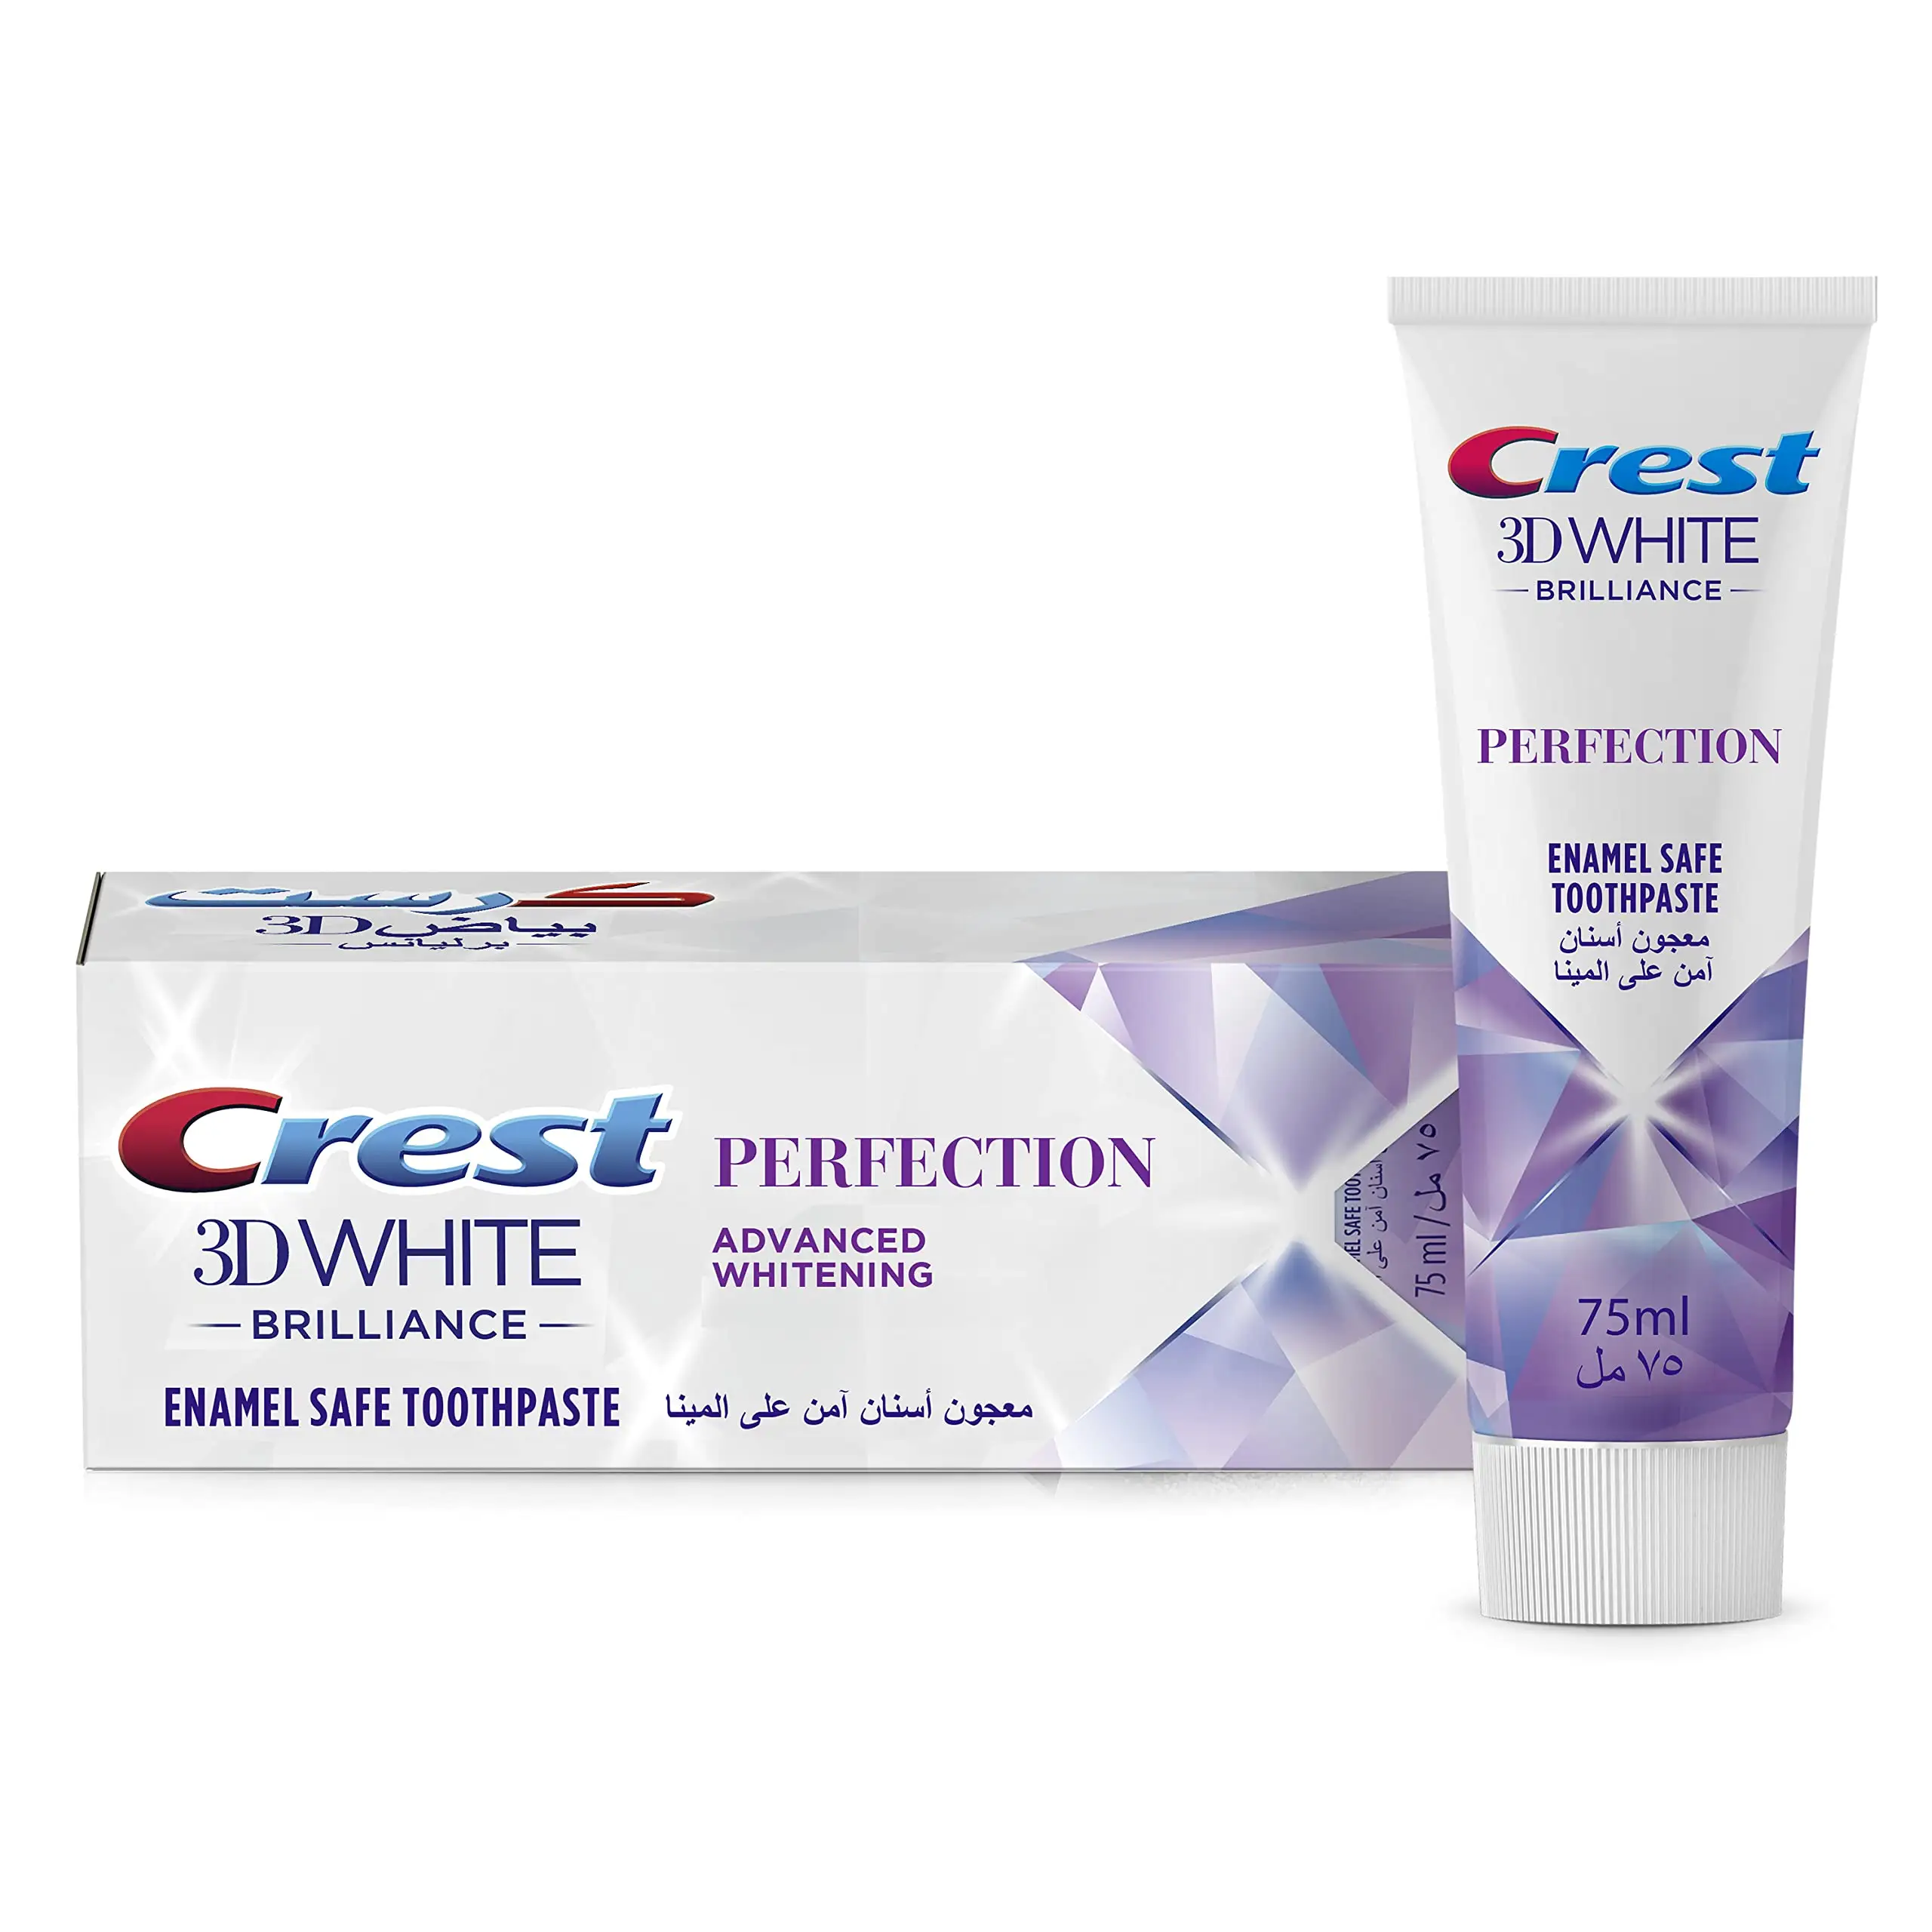 Crest Complete Toothpaste with Scope (5 X 170 Ml) Net Wt 850 Ml (0.85 Lt)- 0.85 Liter